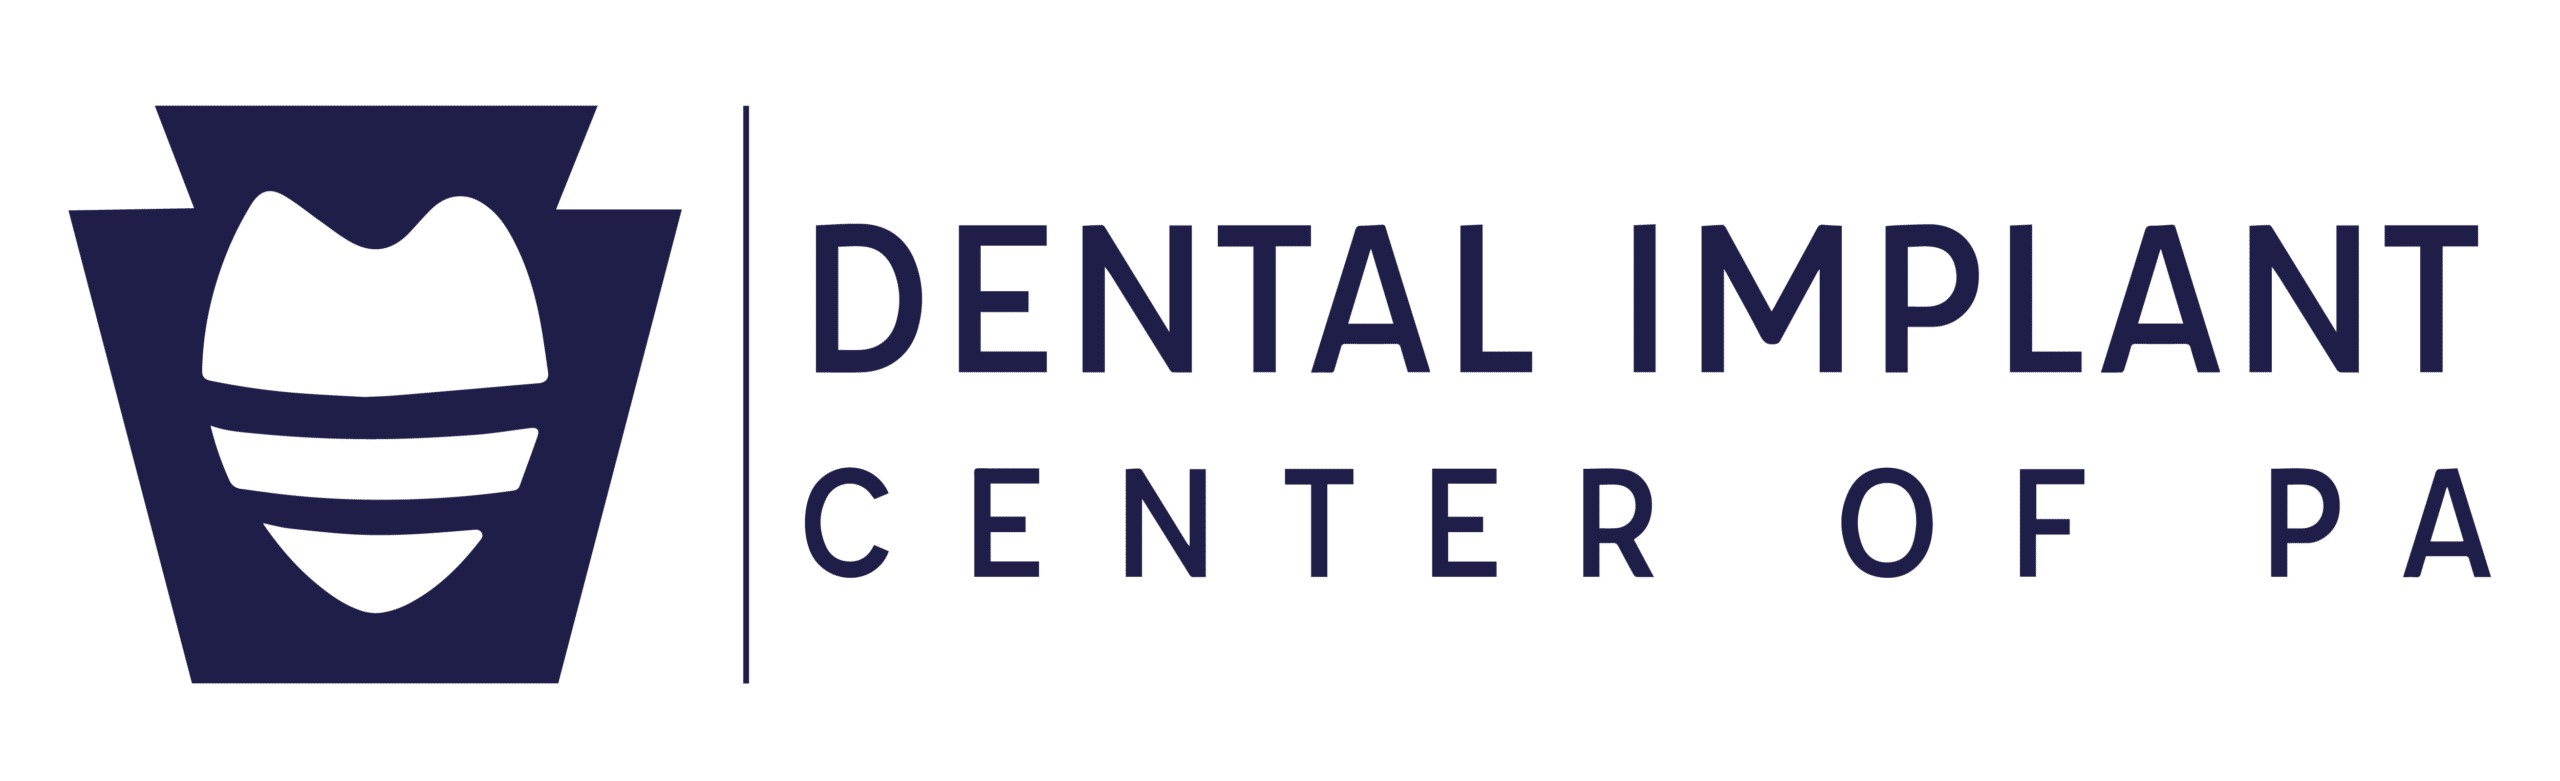 Dental Implant Center of PA - Dental Specialty Center